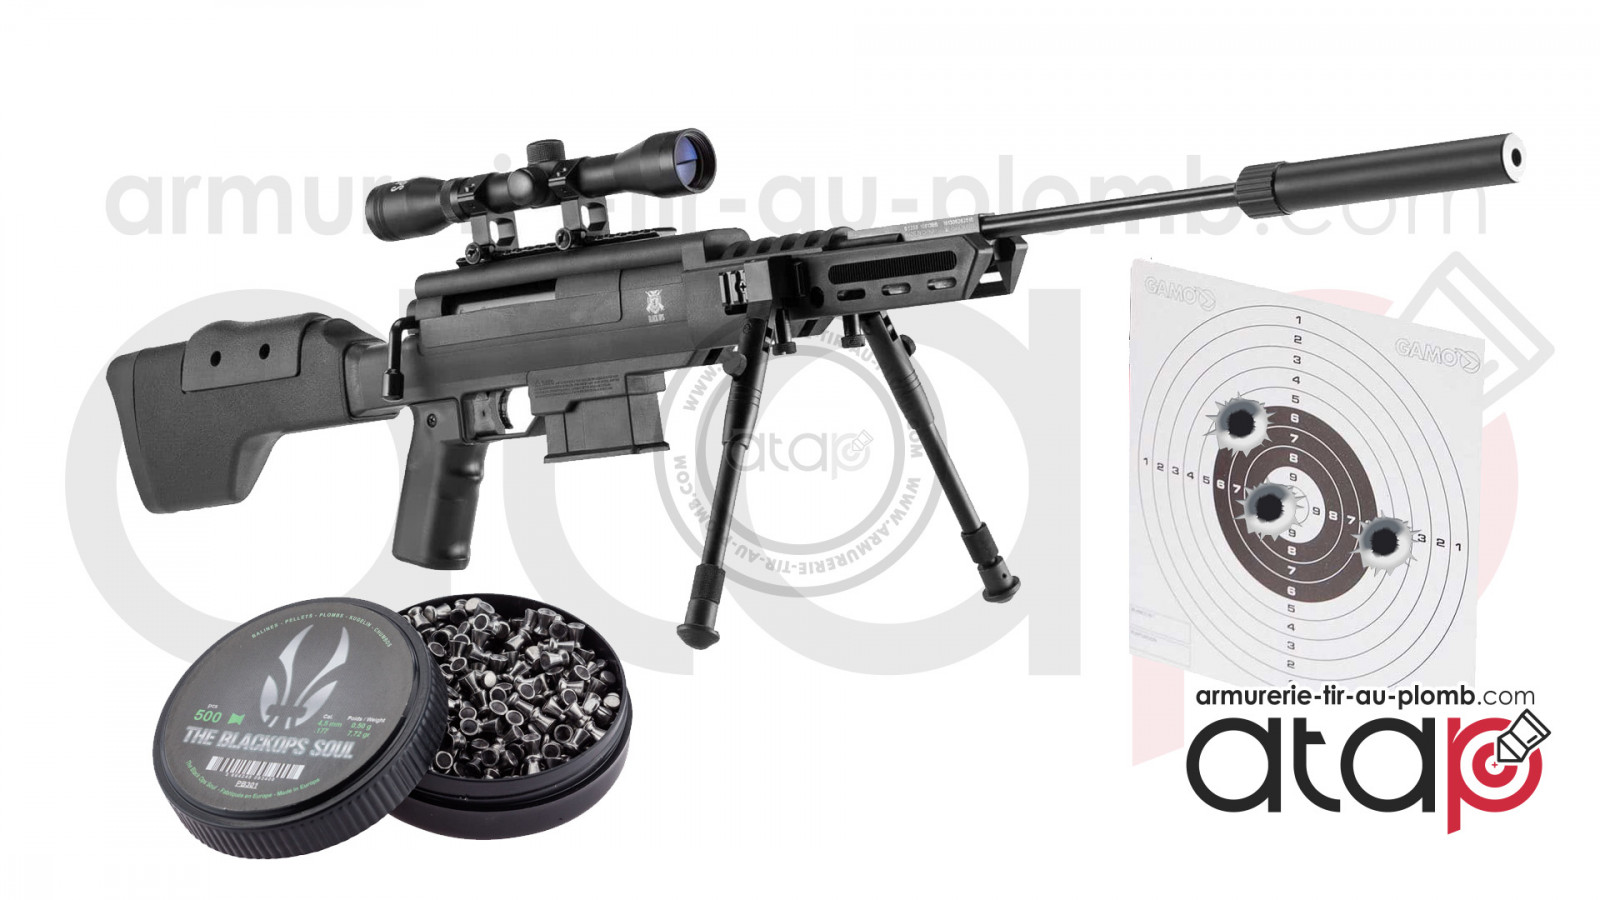 Carabine à air comprime Black Ops / black-ops / blackops Sniper